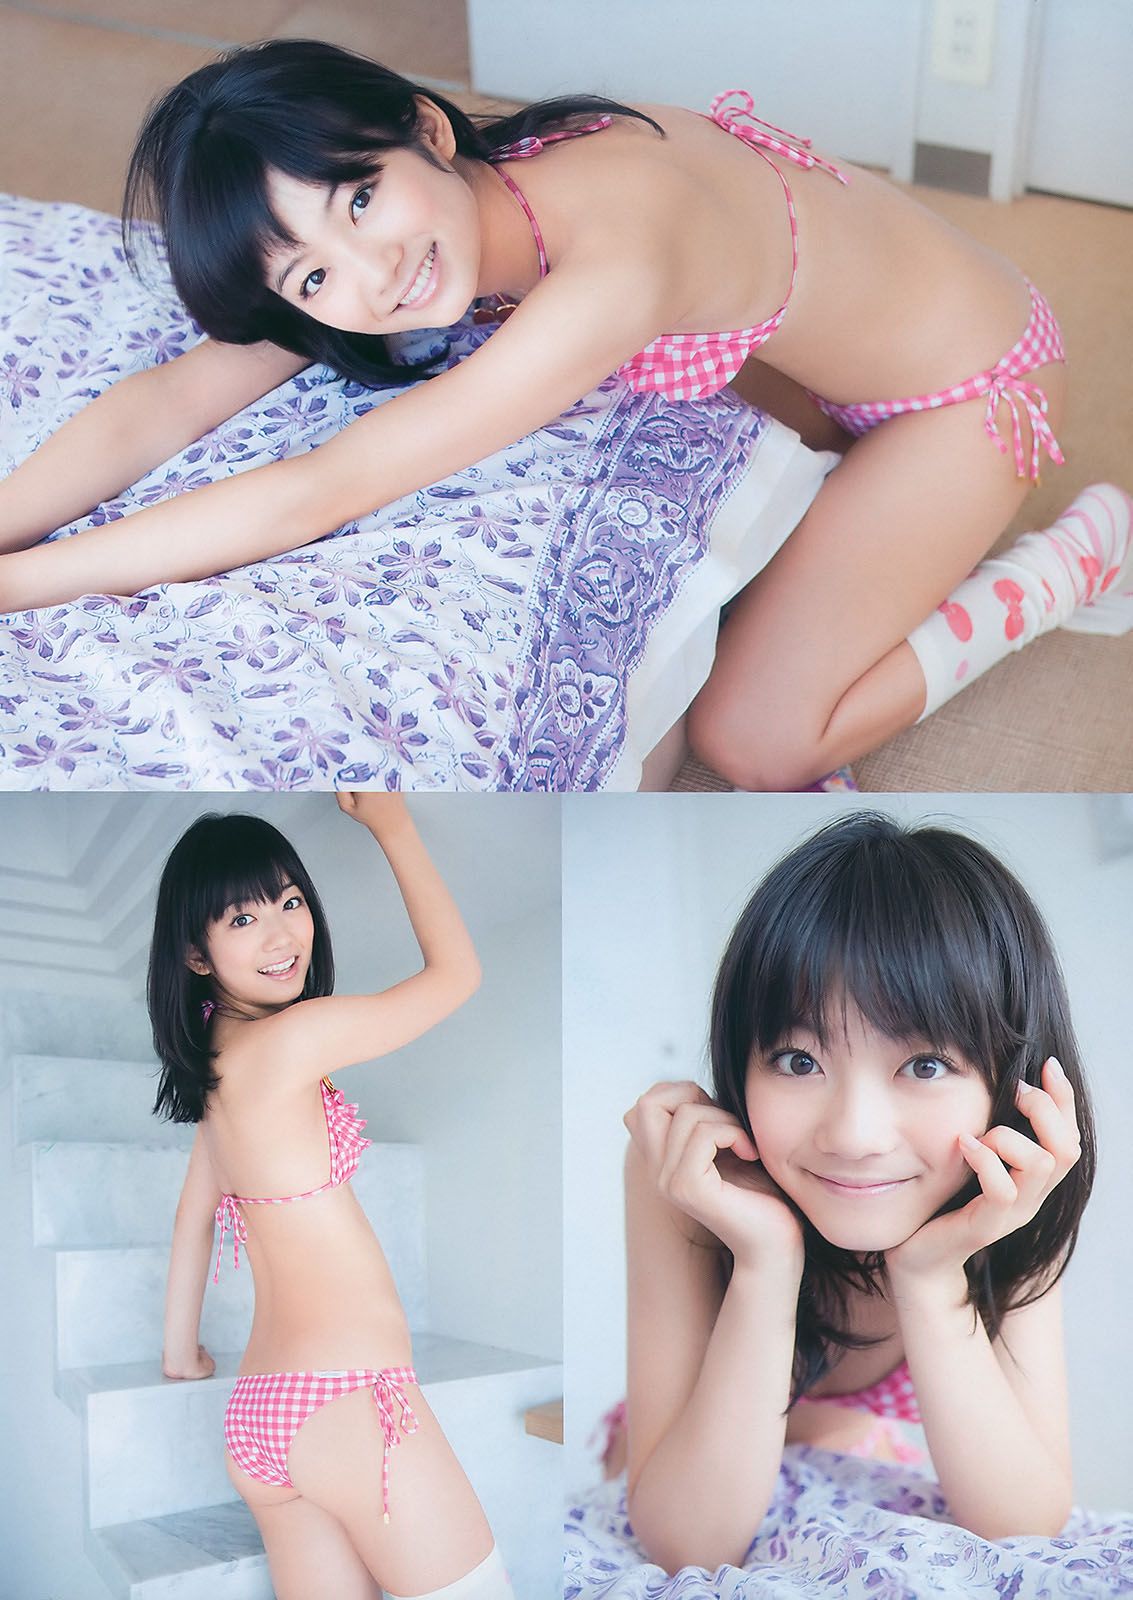 [Image] former idling Morita ryoka's body too erotic double awesome. [3] 12